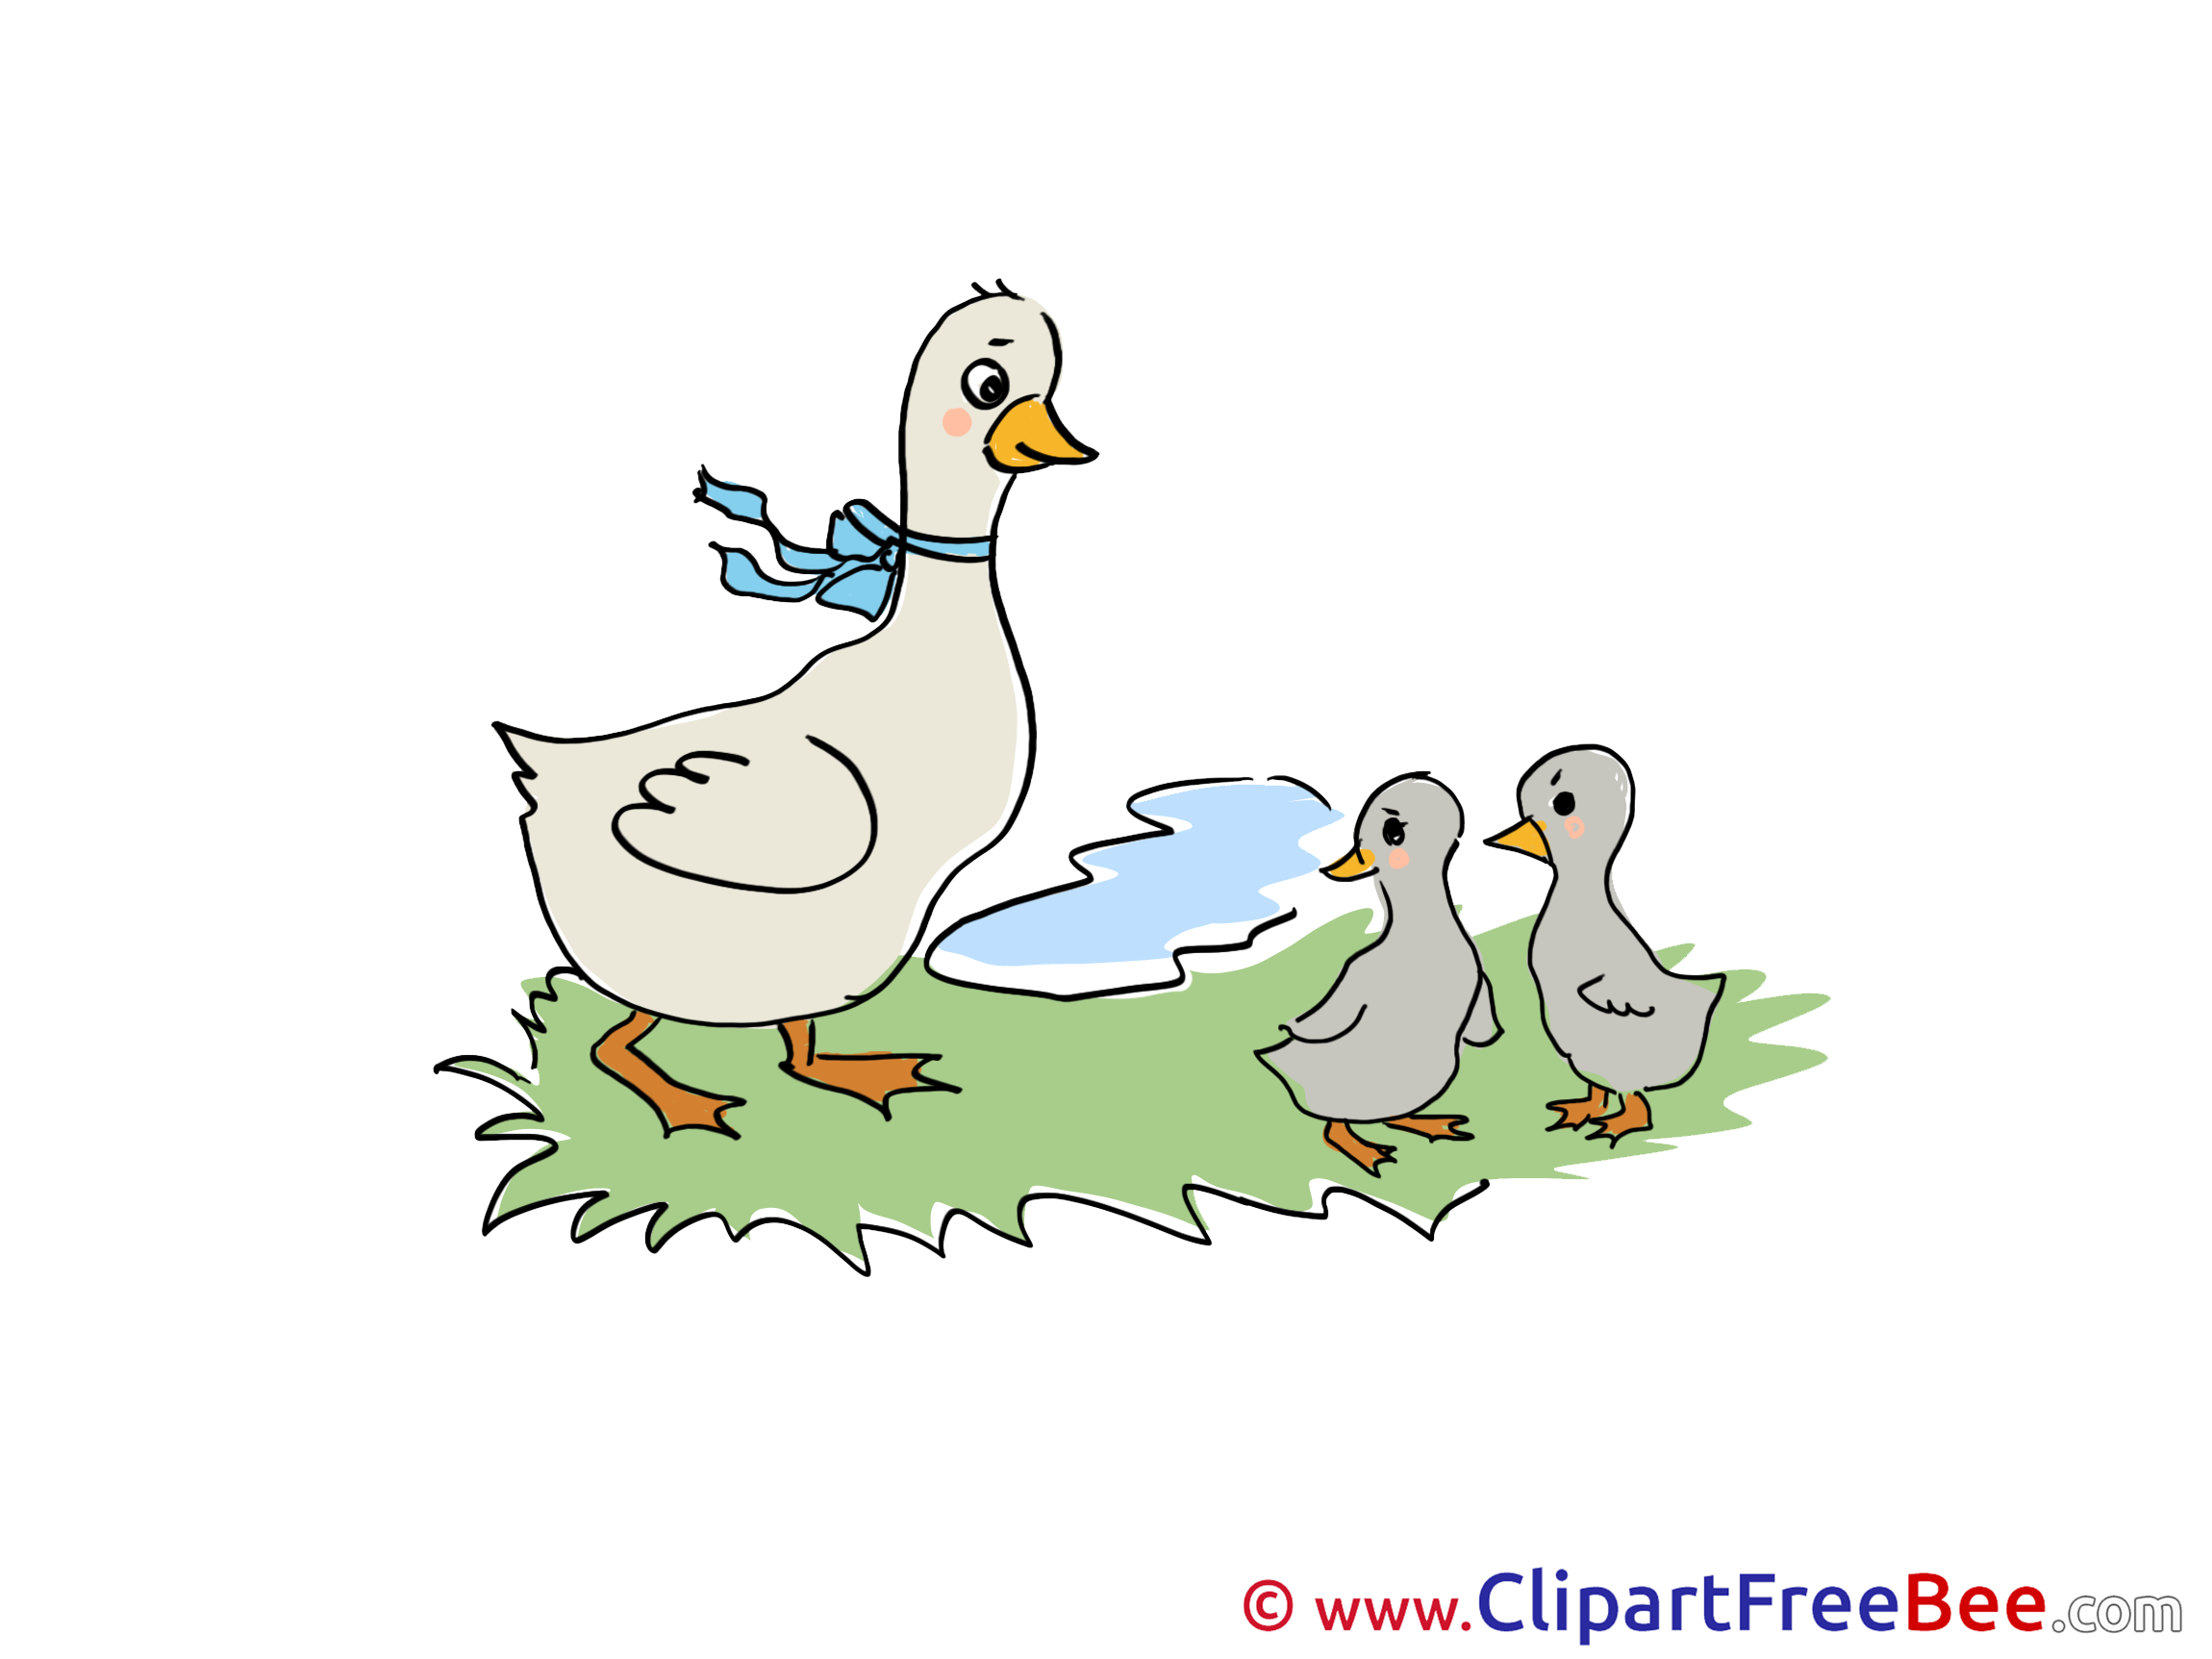 Ducks Family printable Illustrations for free